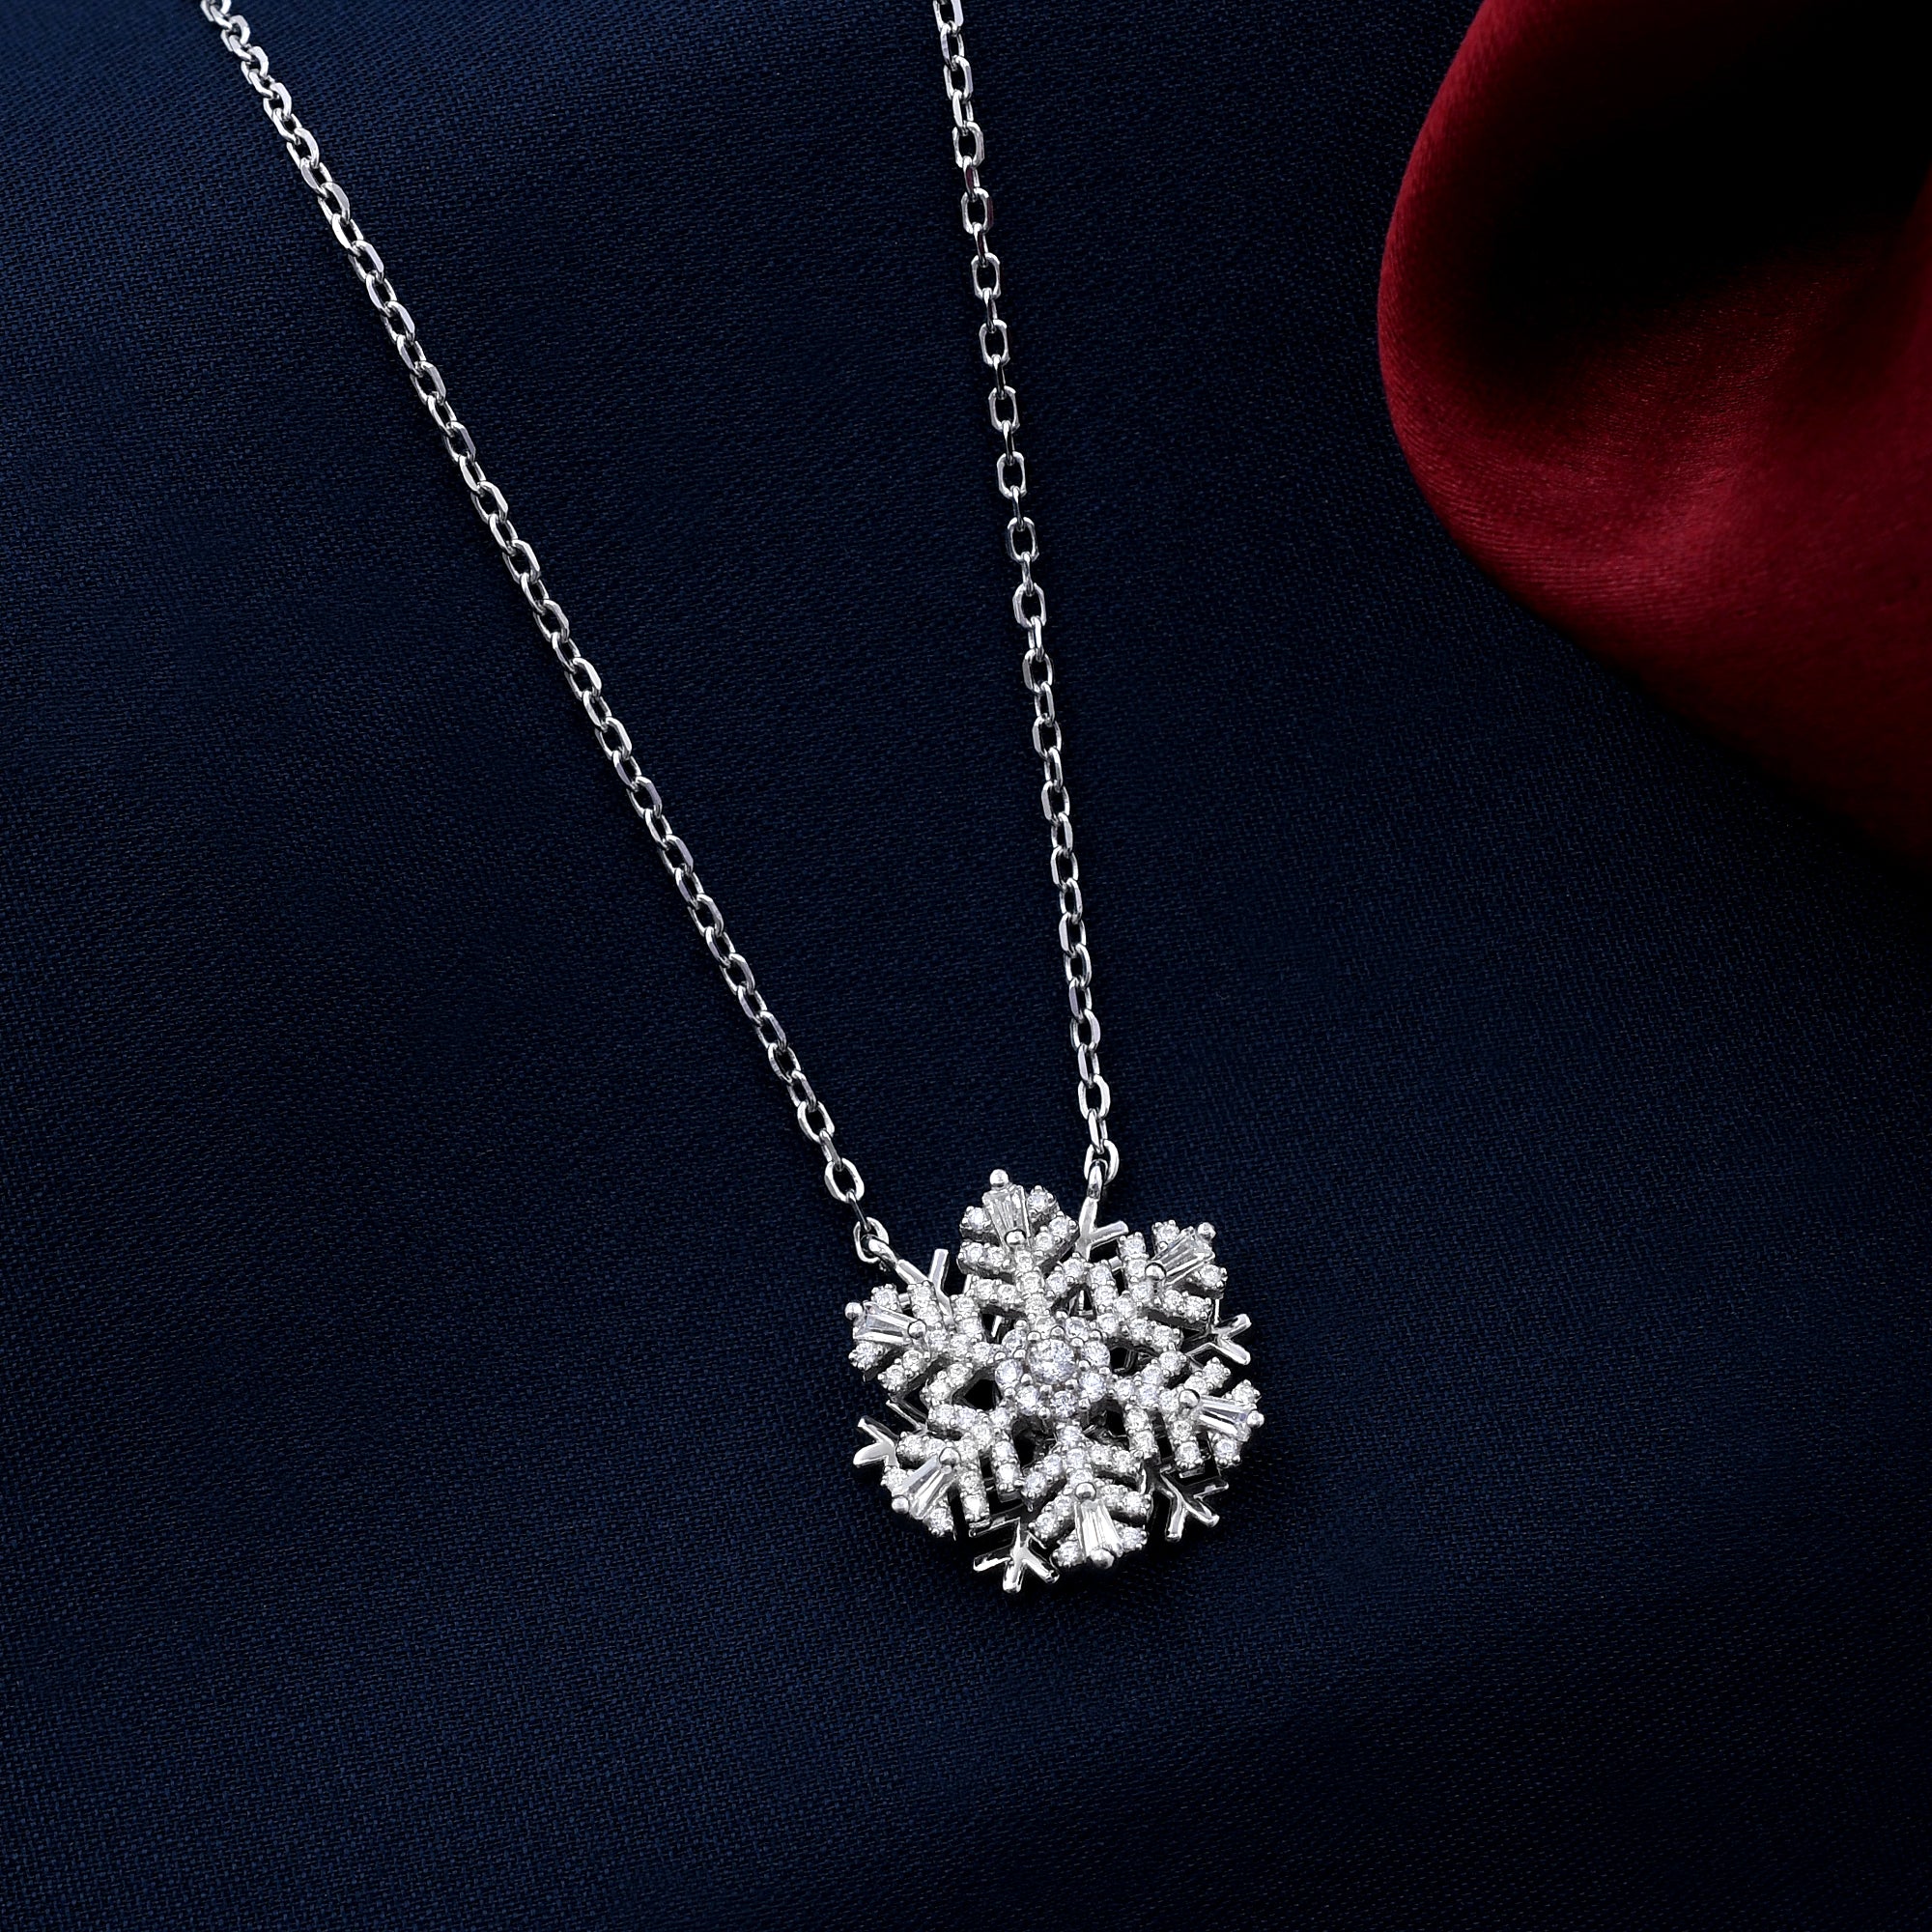 Snow Flower Design 925 Sterling Silver Pendant